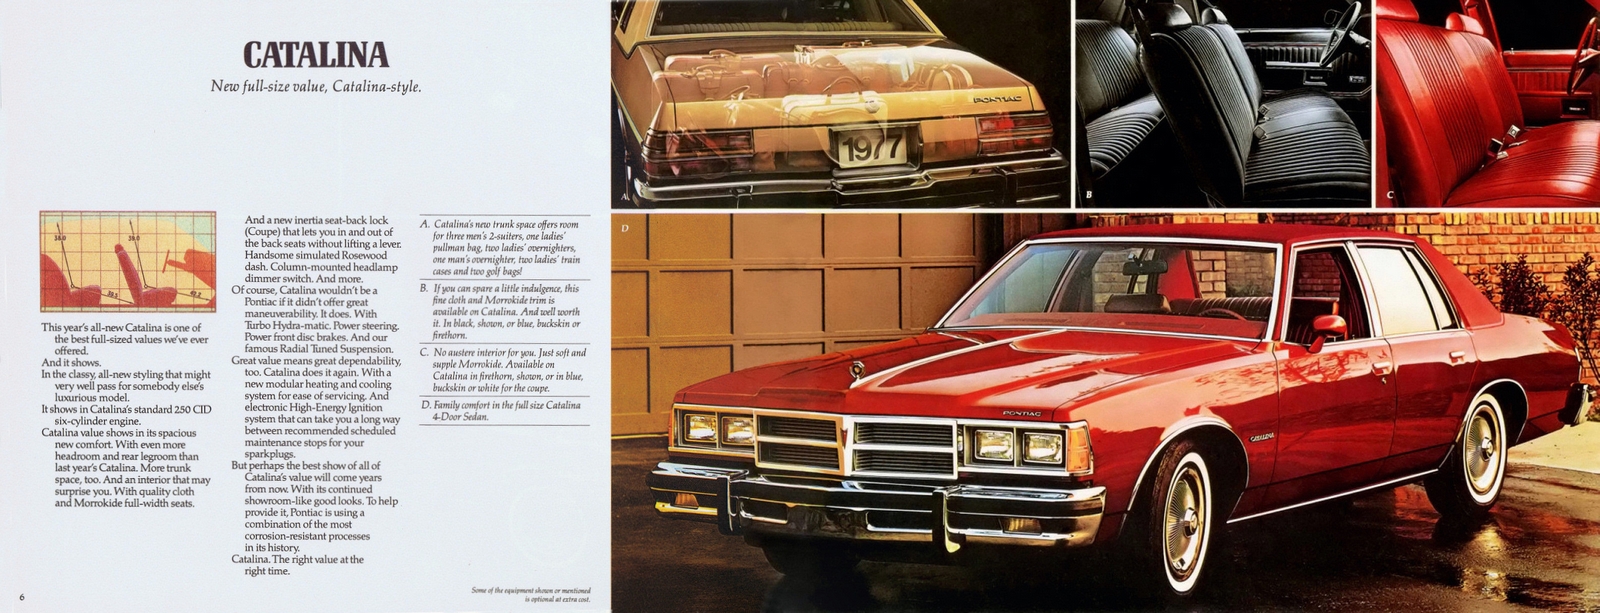 n_1977 Pontiac Full Size (Cdn)-06-07.jpg